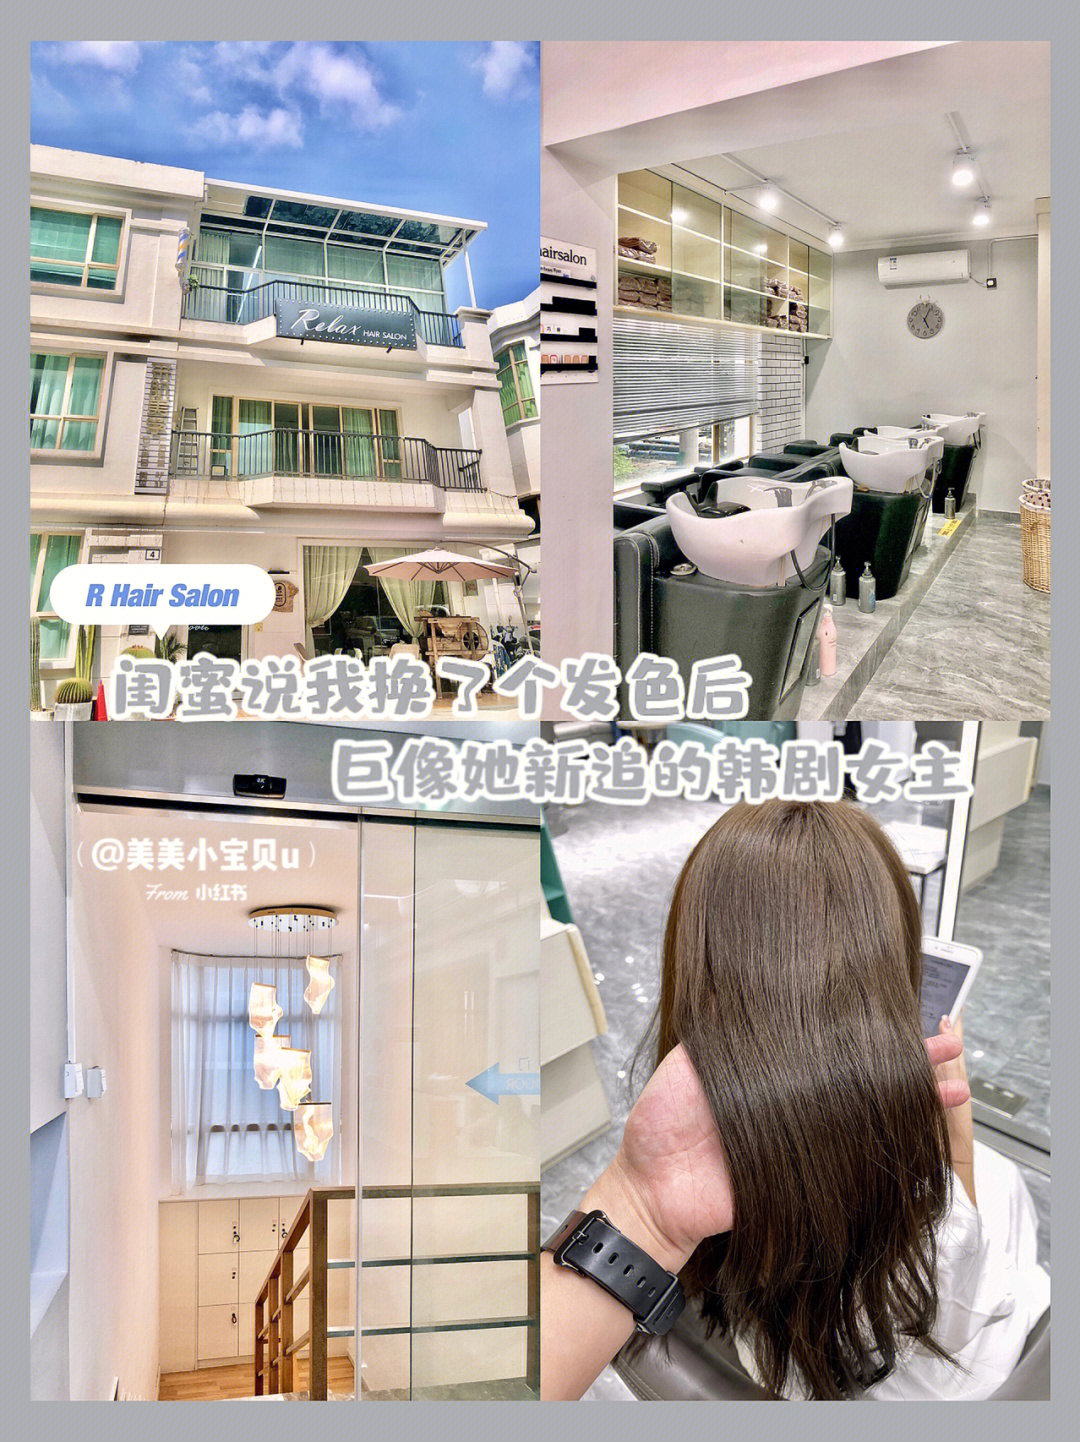 r hair salon99 中山市南区街道恒和里4号3楼relax hair沙龙美发